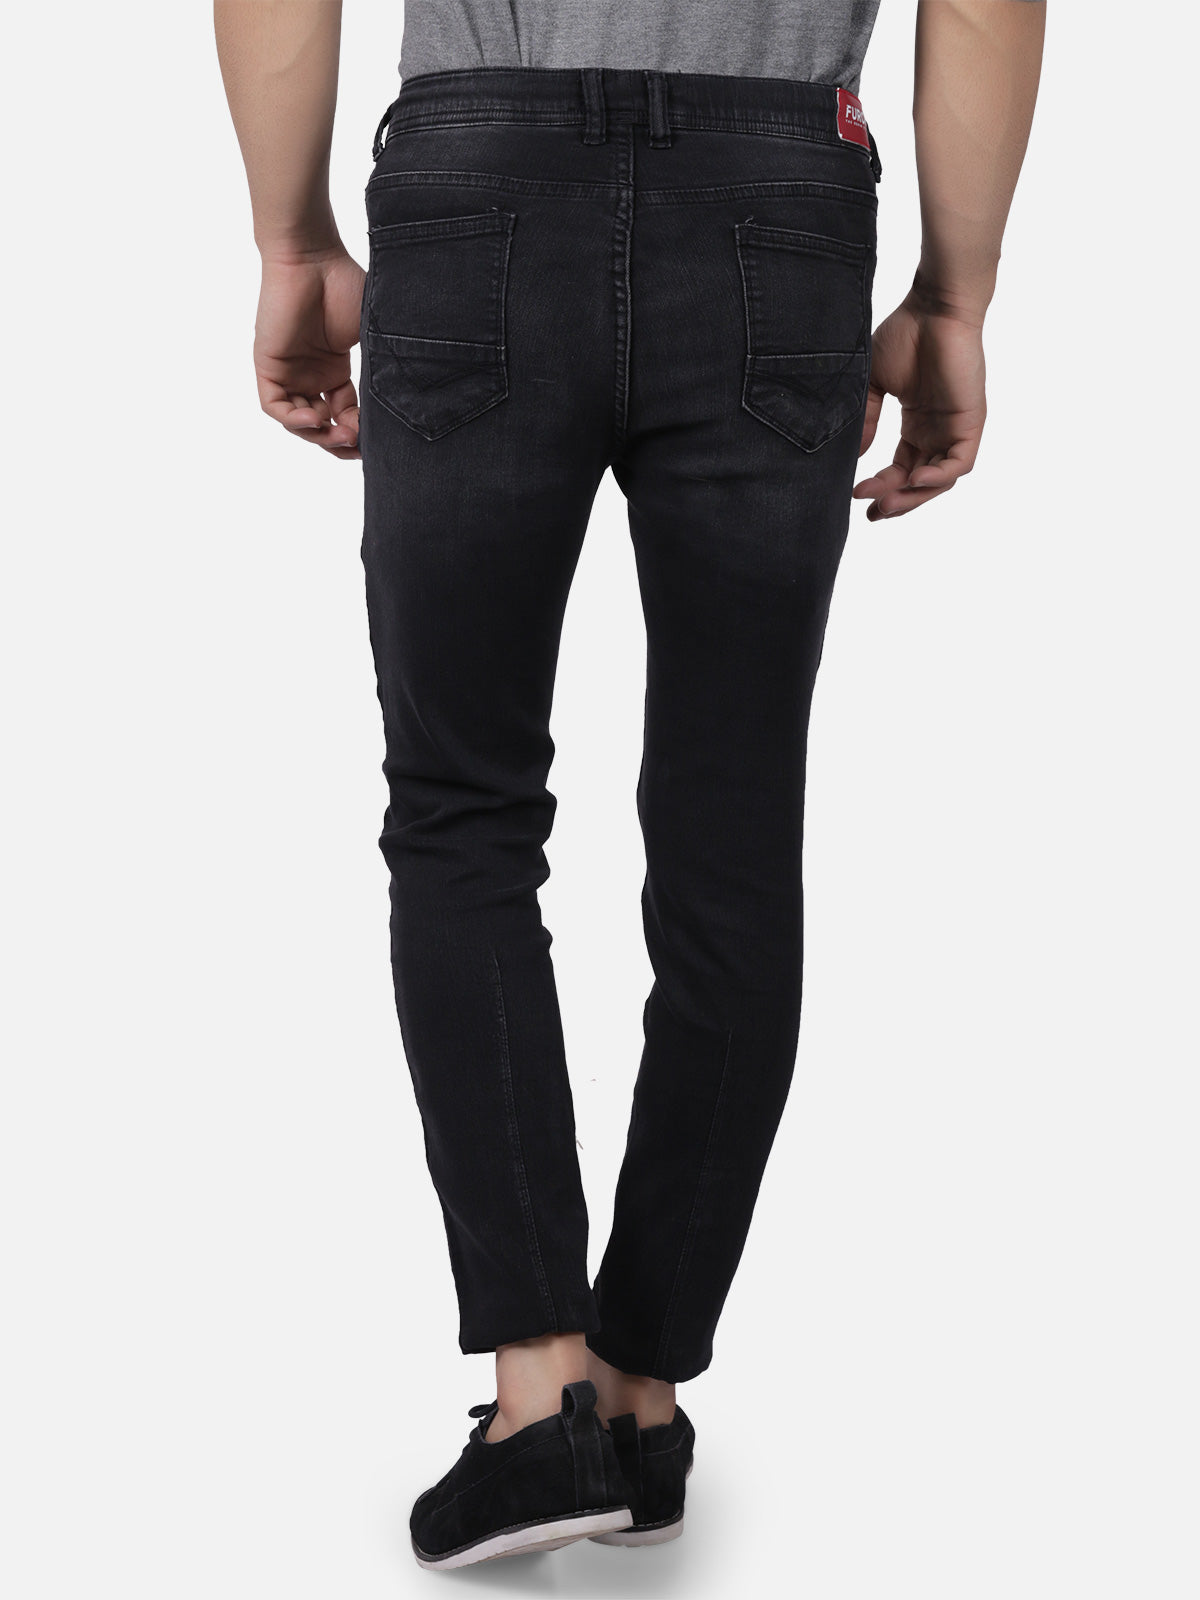 Men's Charcoal Denim Jeans - FMBP18-042